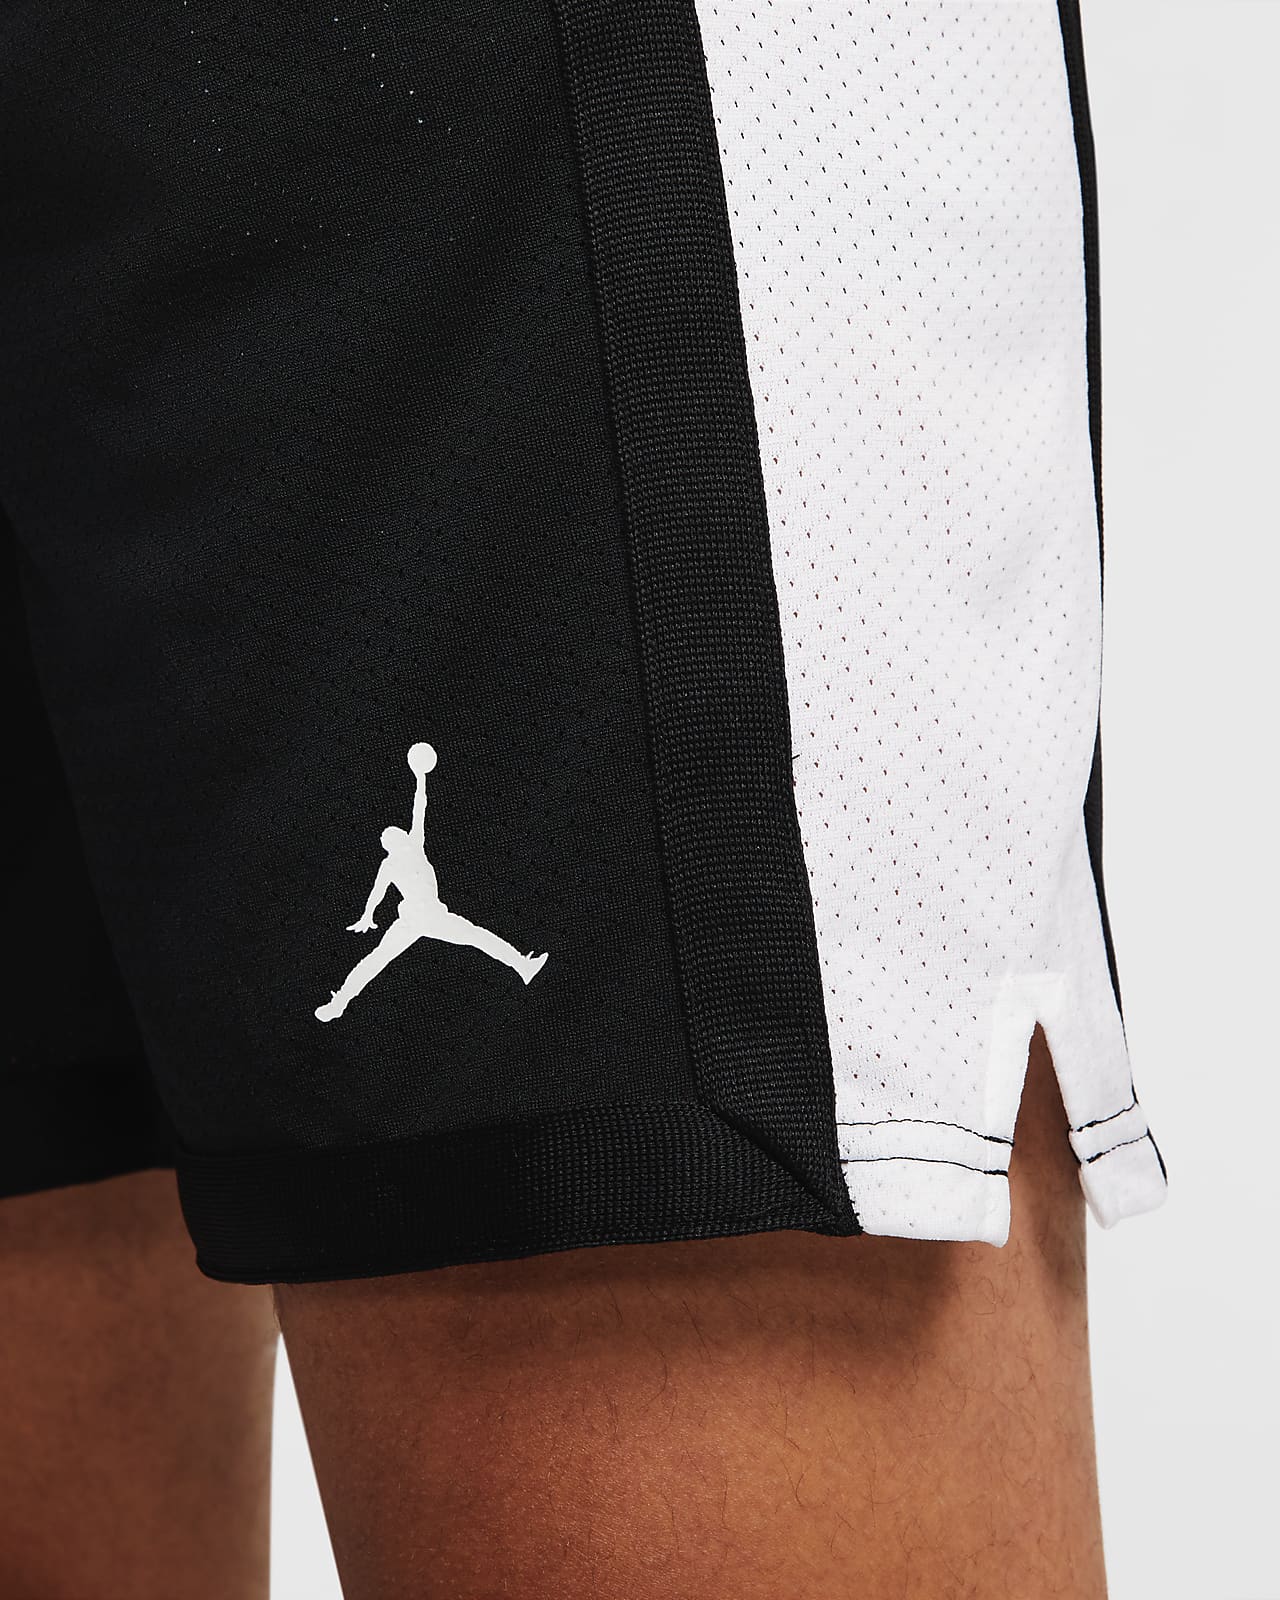 Calça Legging Nike Jordan Sport Dri-Fit - Masculina em Promoção